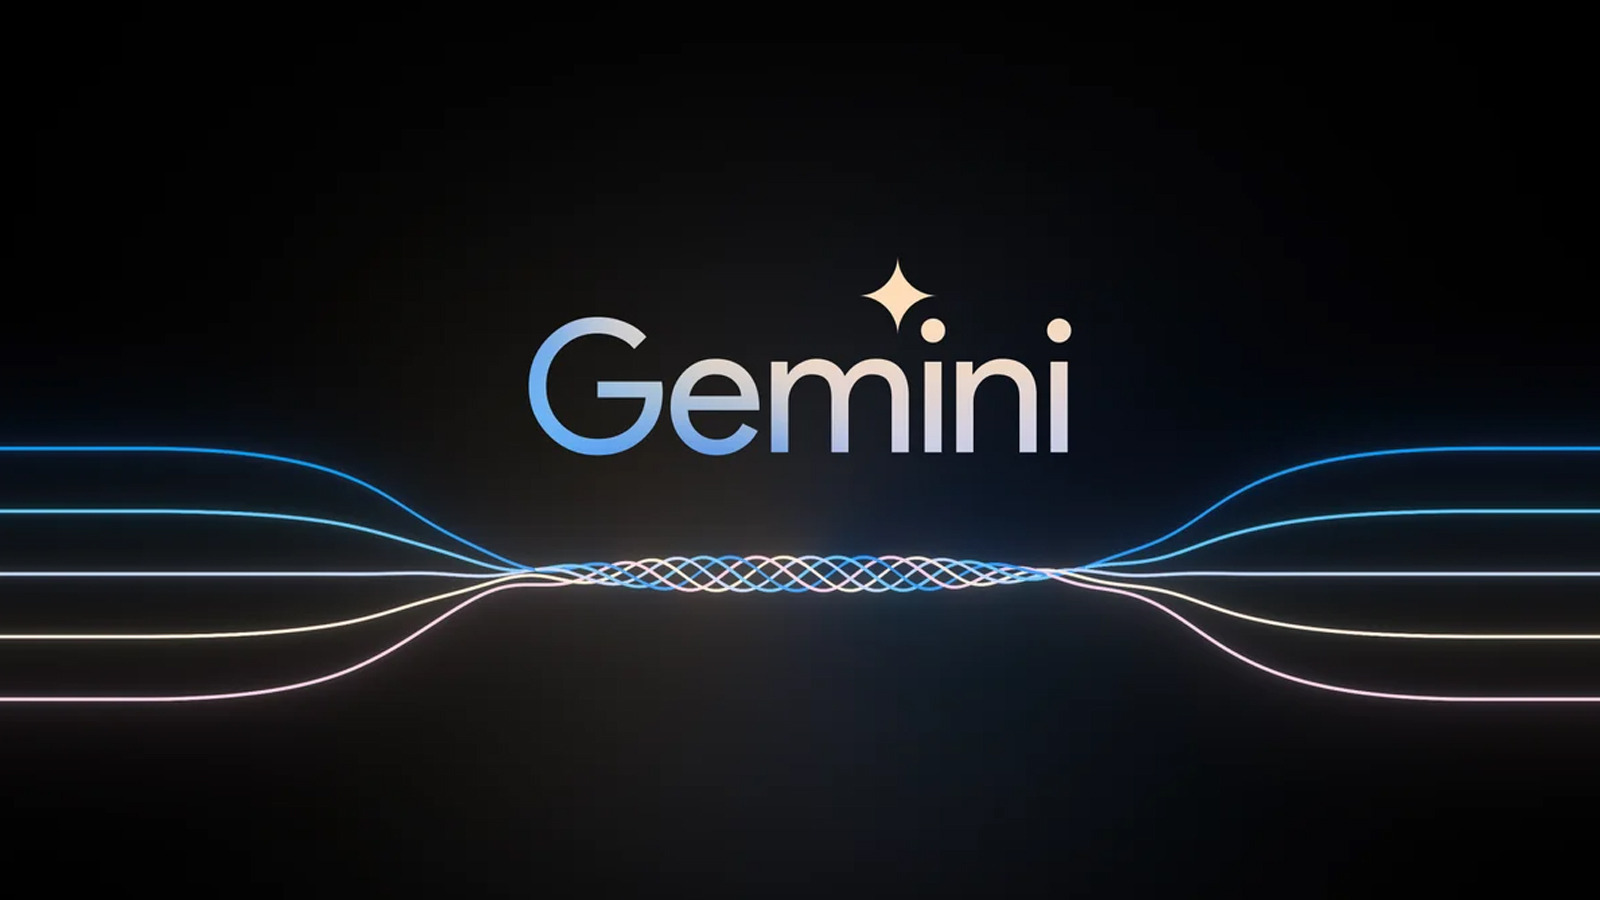 How To Make Google Gemini’s AI Responses More Precise